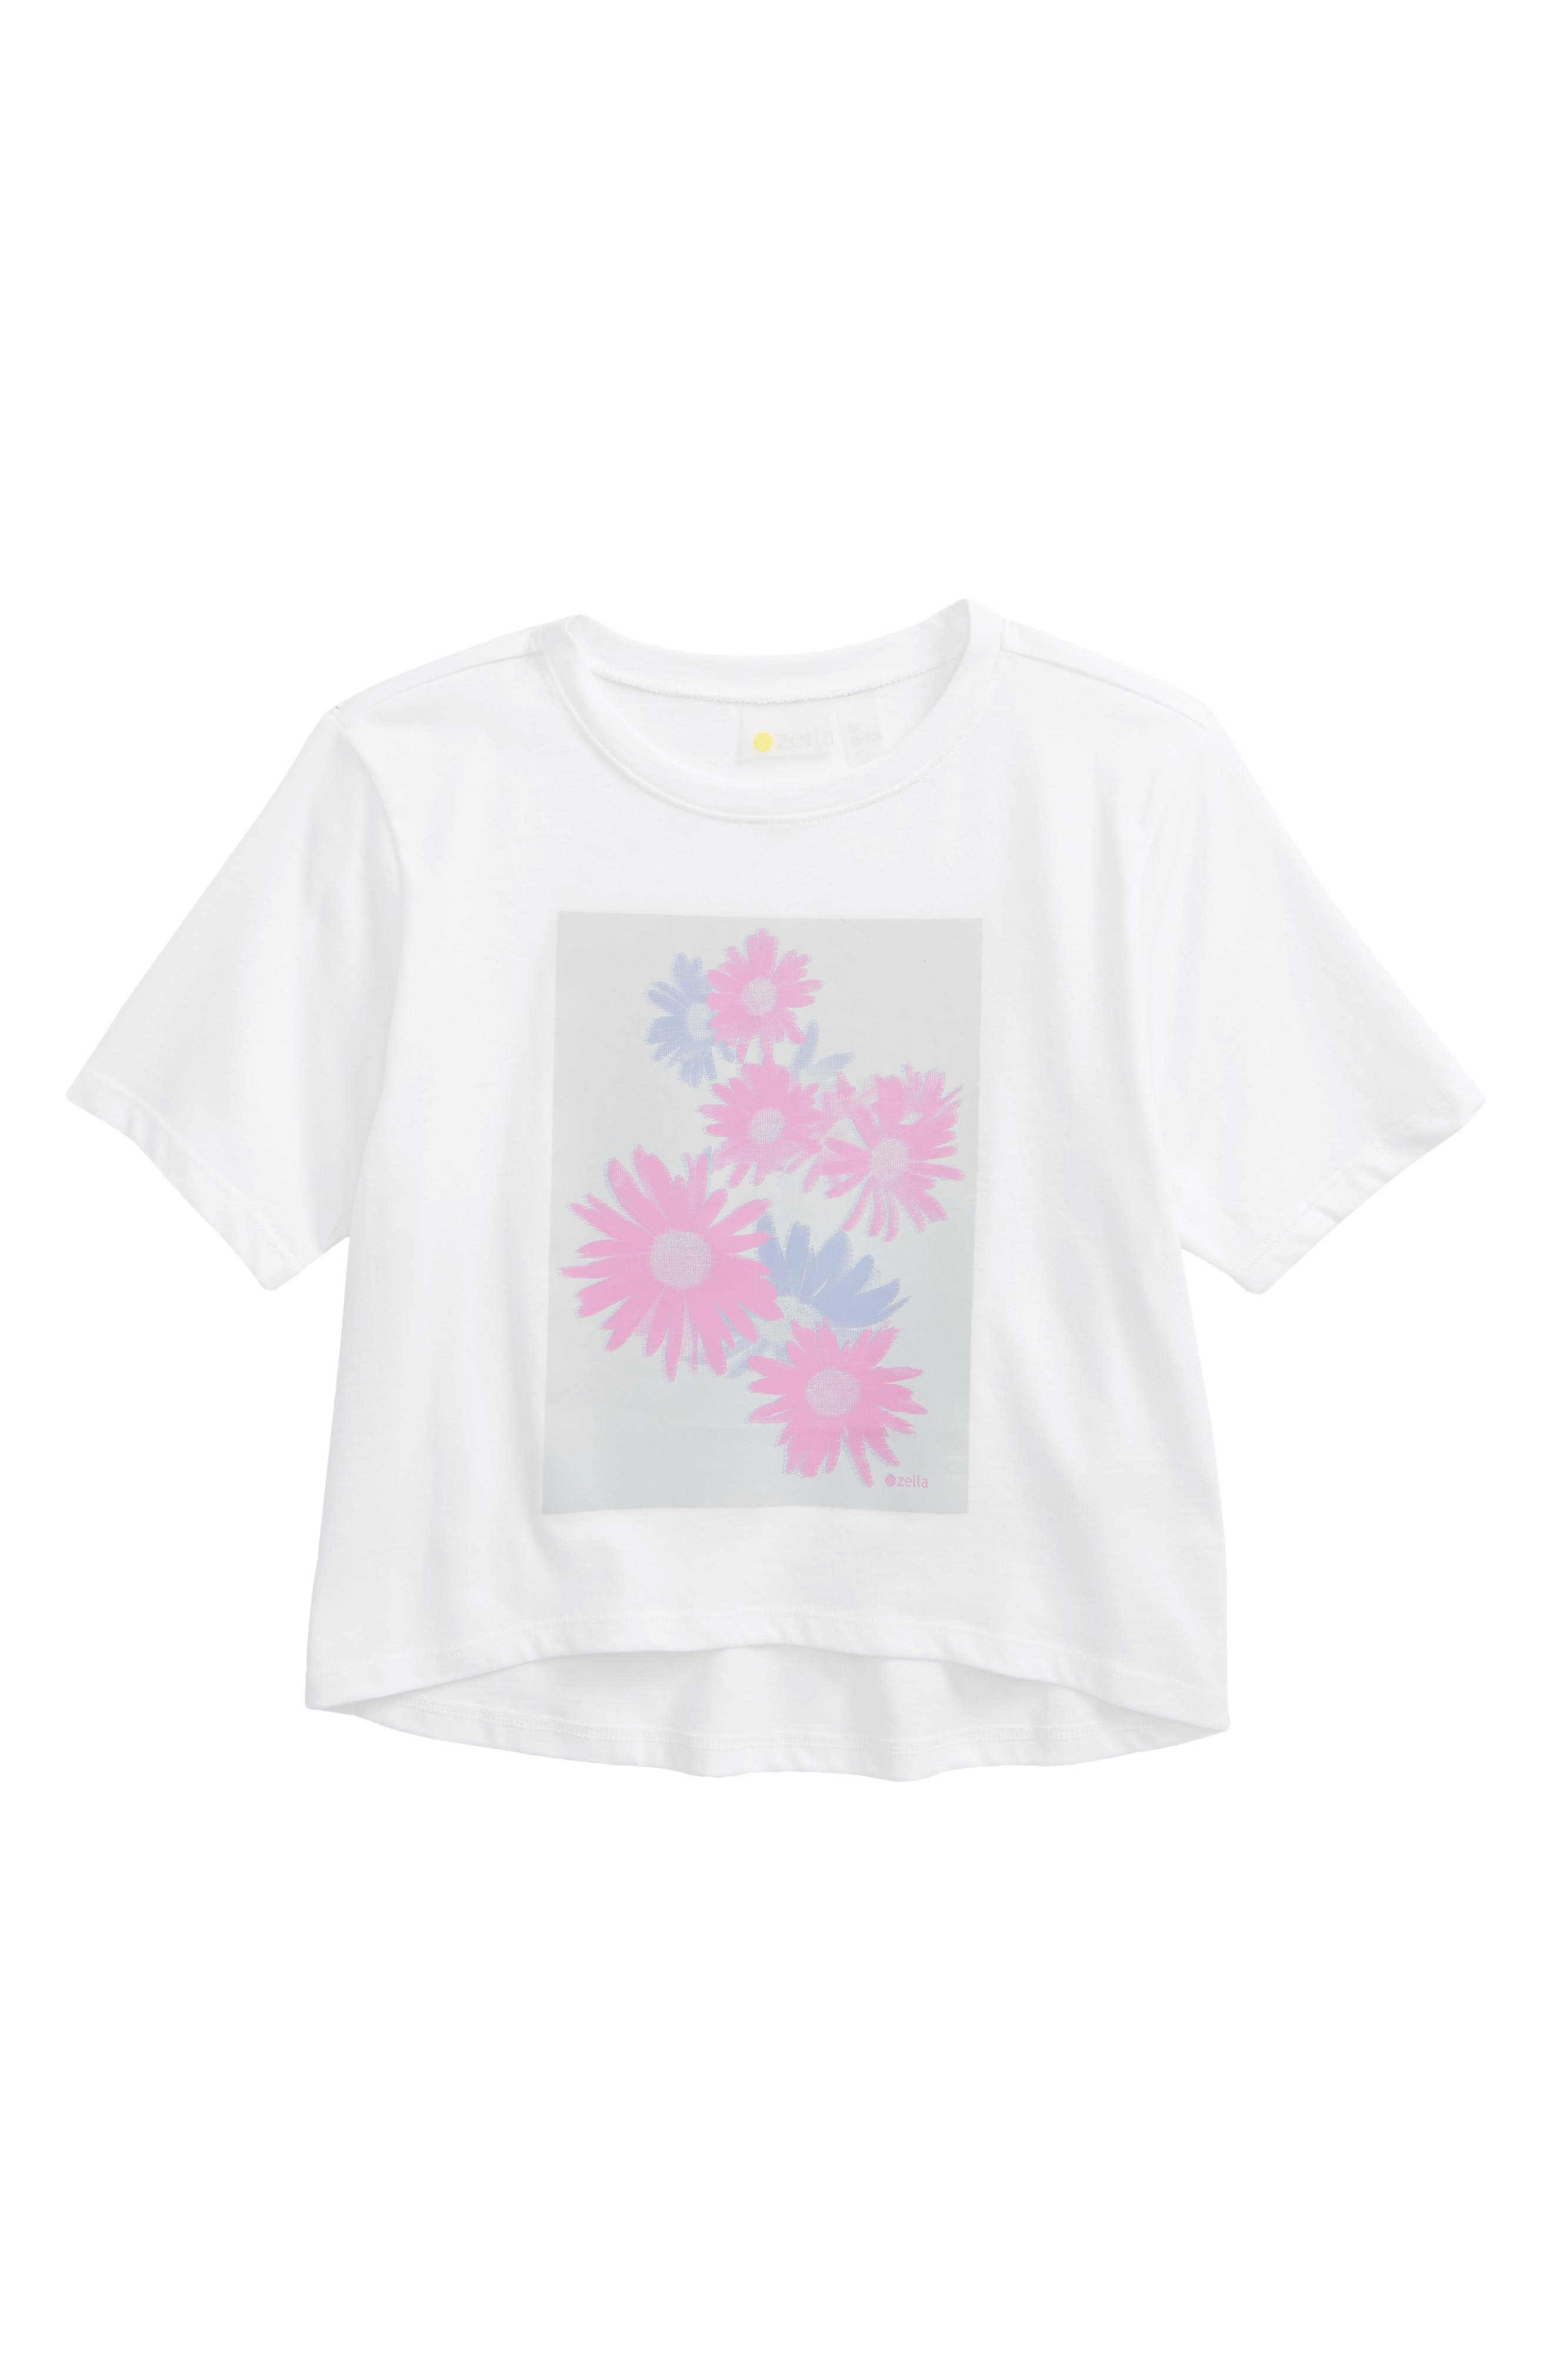 Girls Kids Short Sleeve T-Shirt Tops Pink Sweet Heart tee 2-14Y 